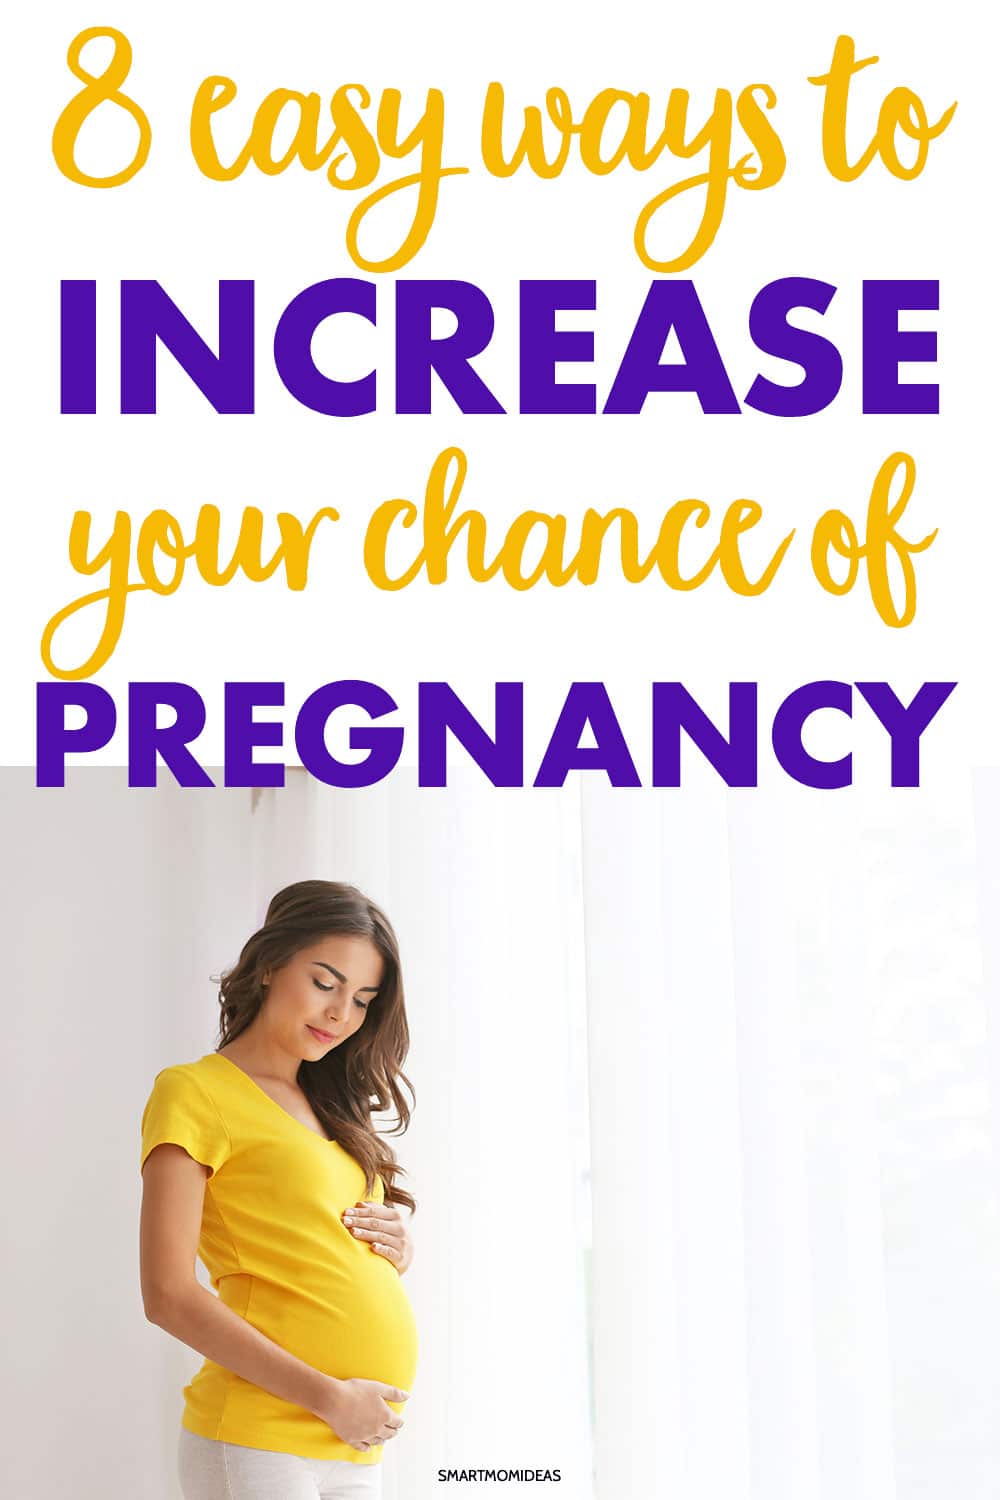 Precum pregnancy probability of from Do you